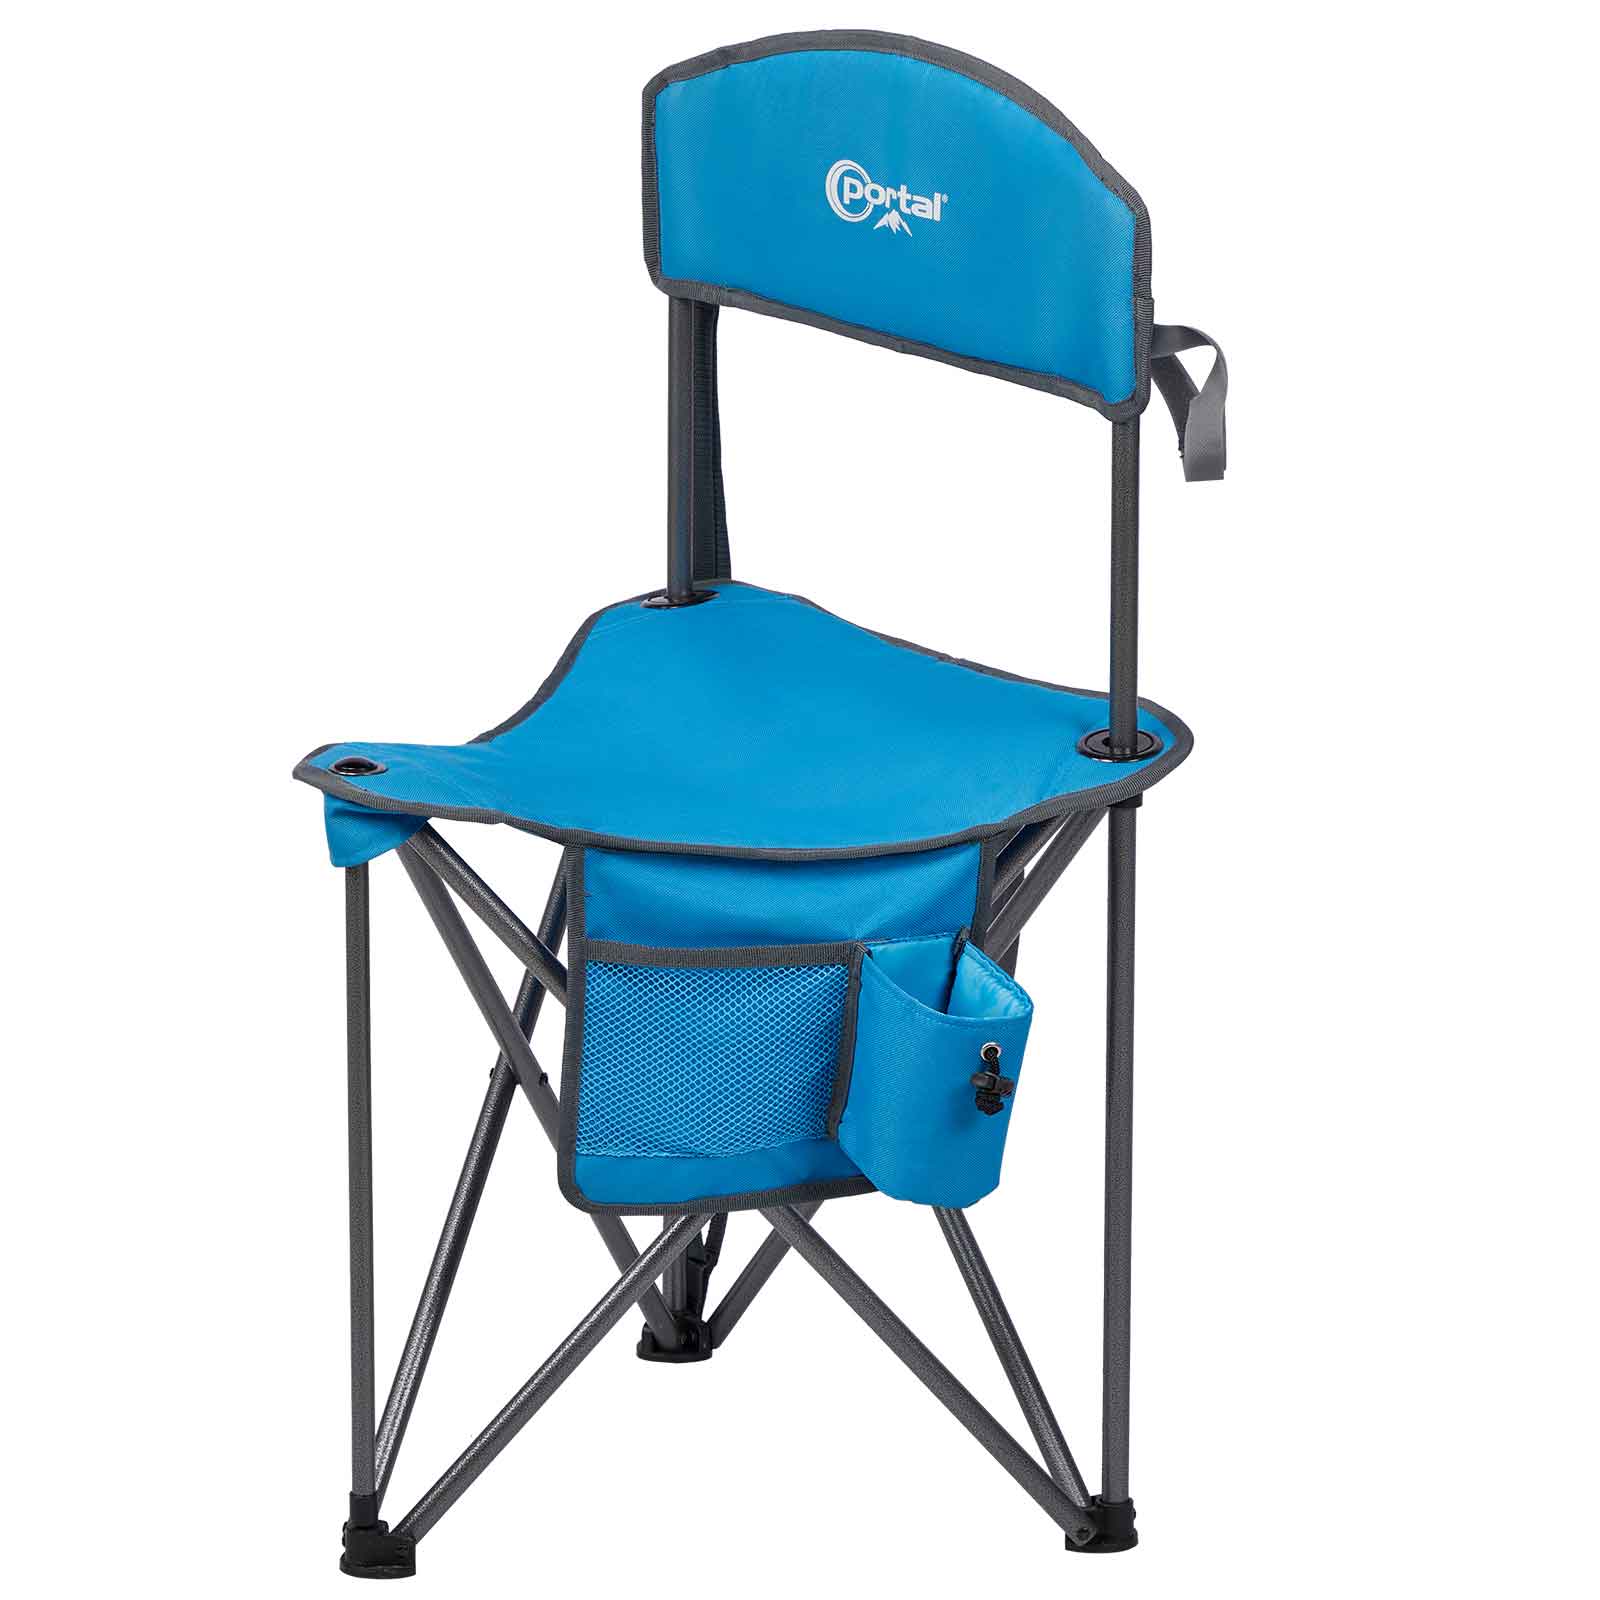 TRIPOD STOOL WOODEN Portable Folding Chair Camping Fishing Stool